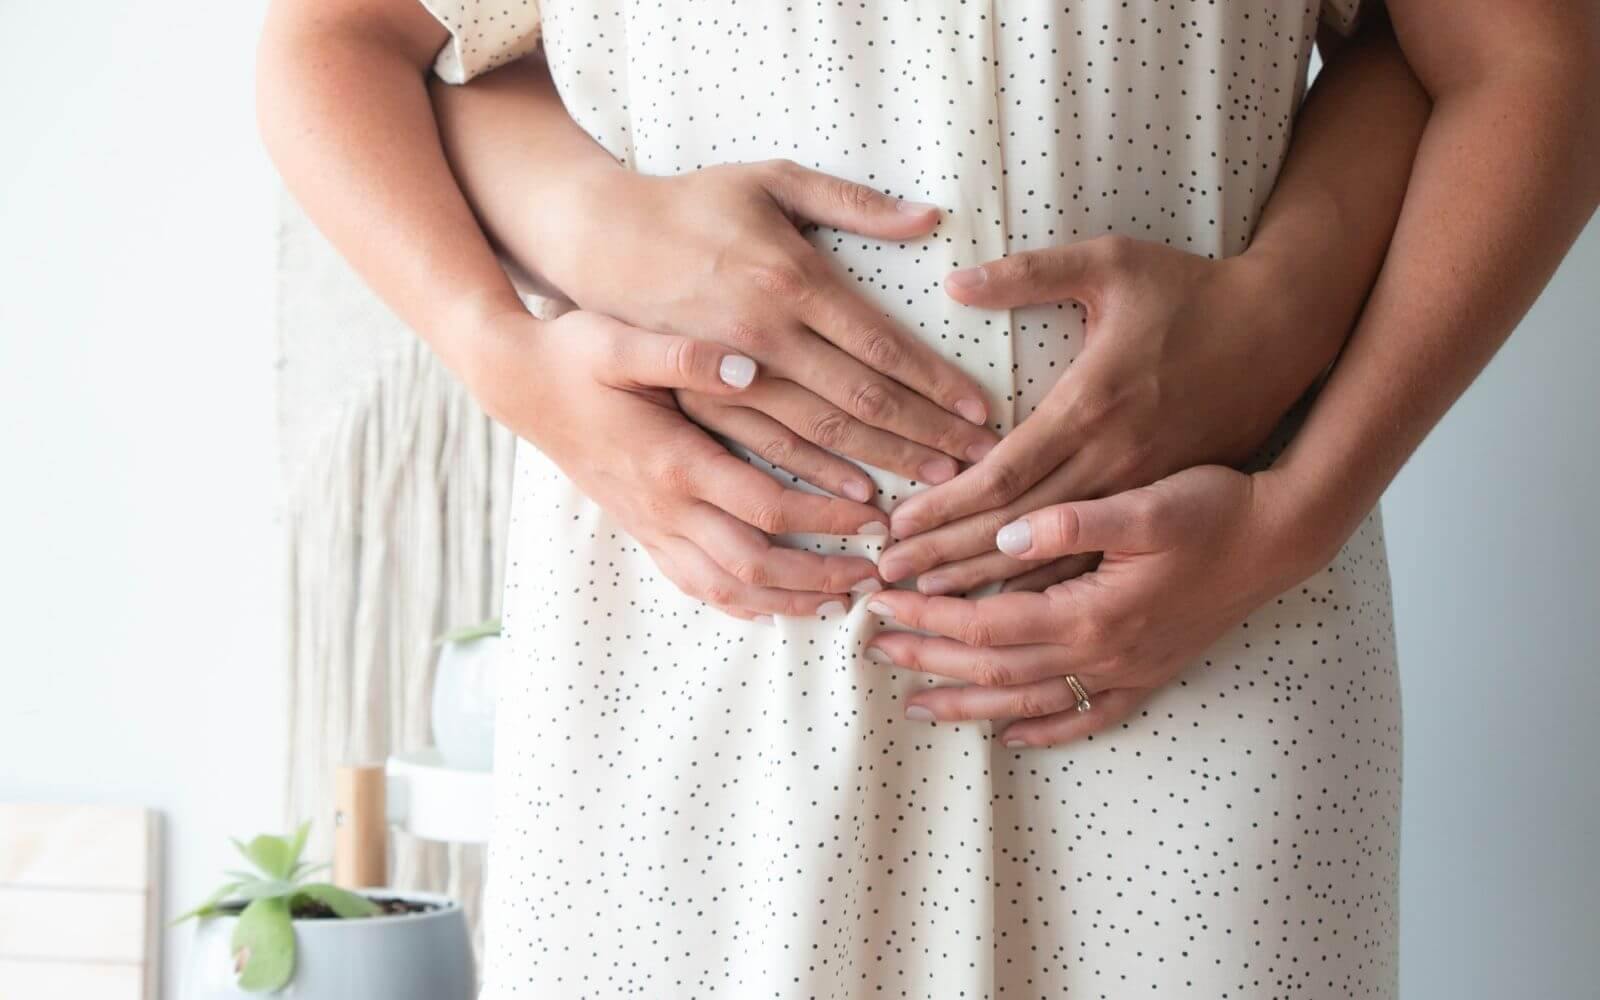 Relaciones sexuales durante el embarazo | ¡Di sí! - Femmes.mx